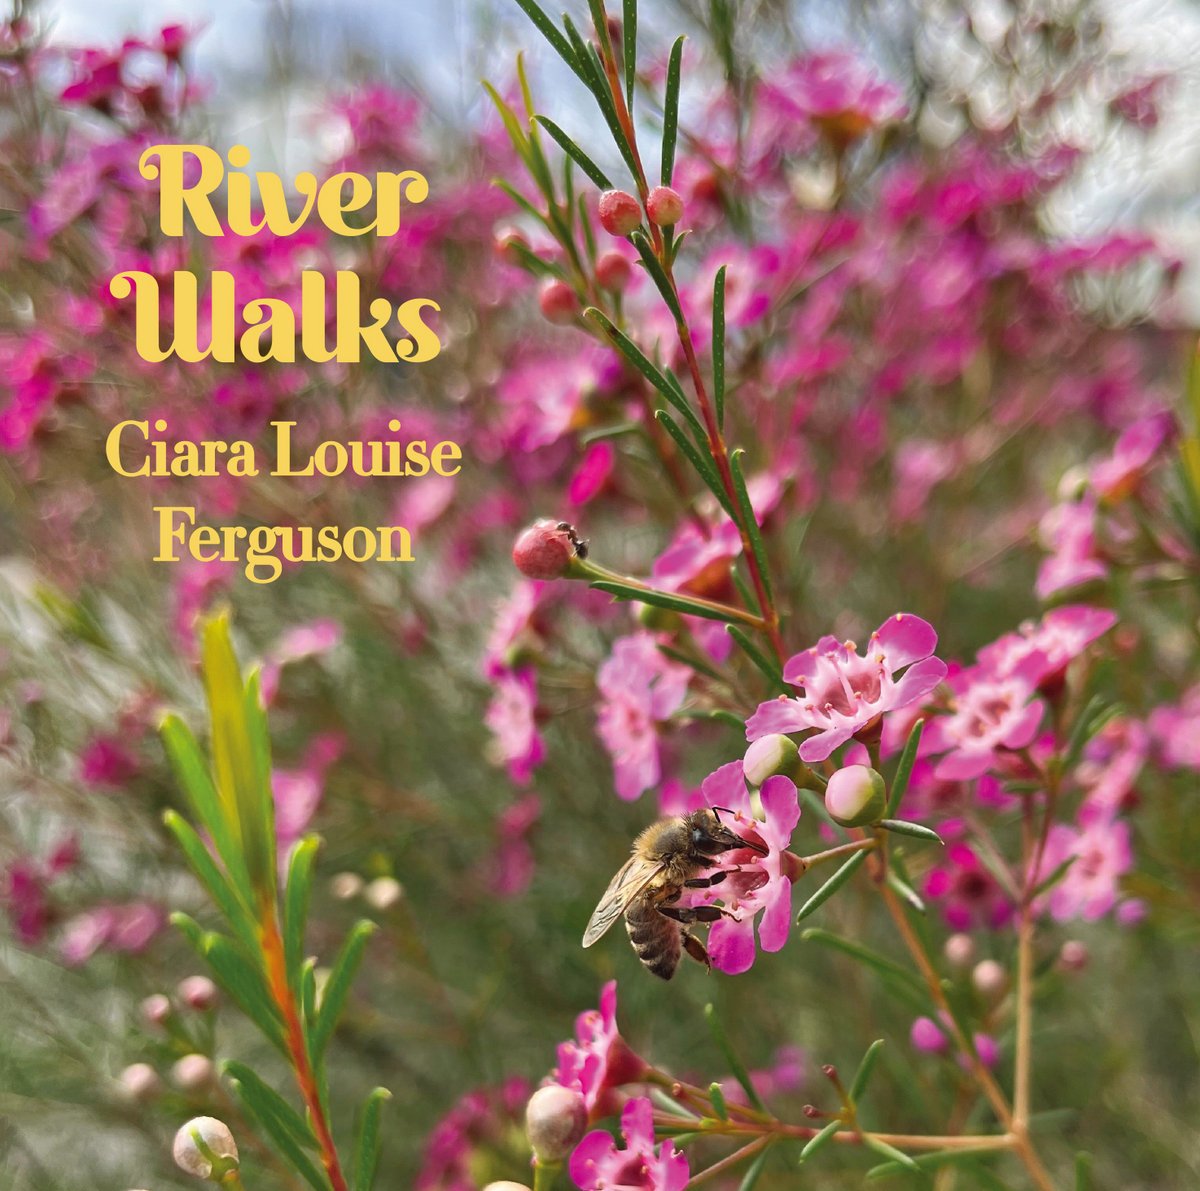 Ciara Louise Ferguson - "River Walks" [Recorded & Mixed (JB), Mastered (JP)]